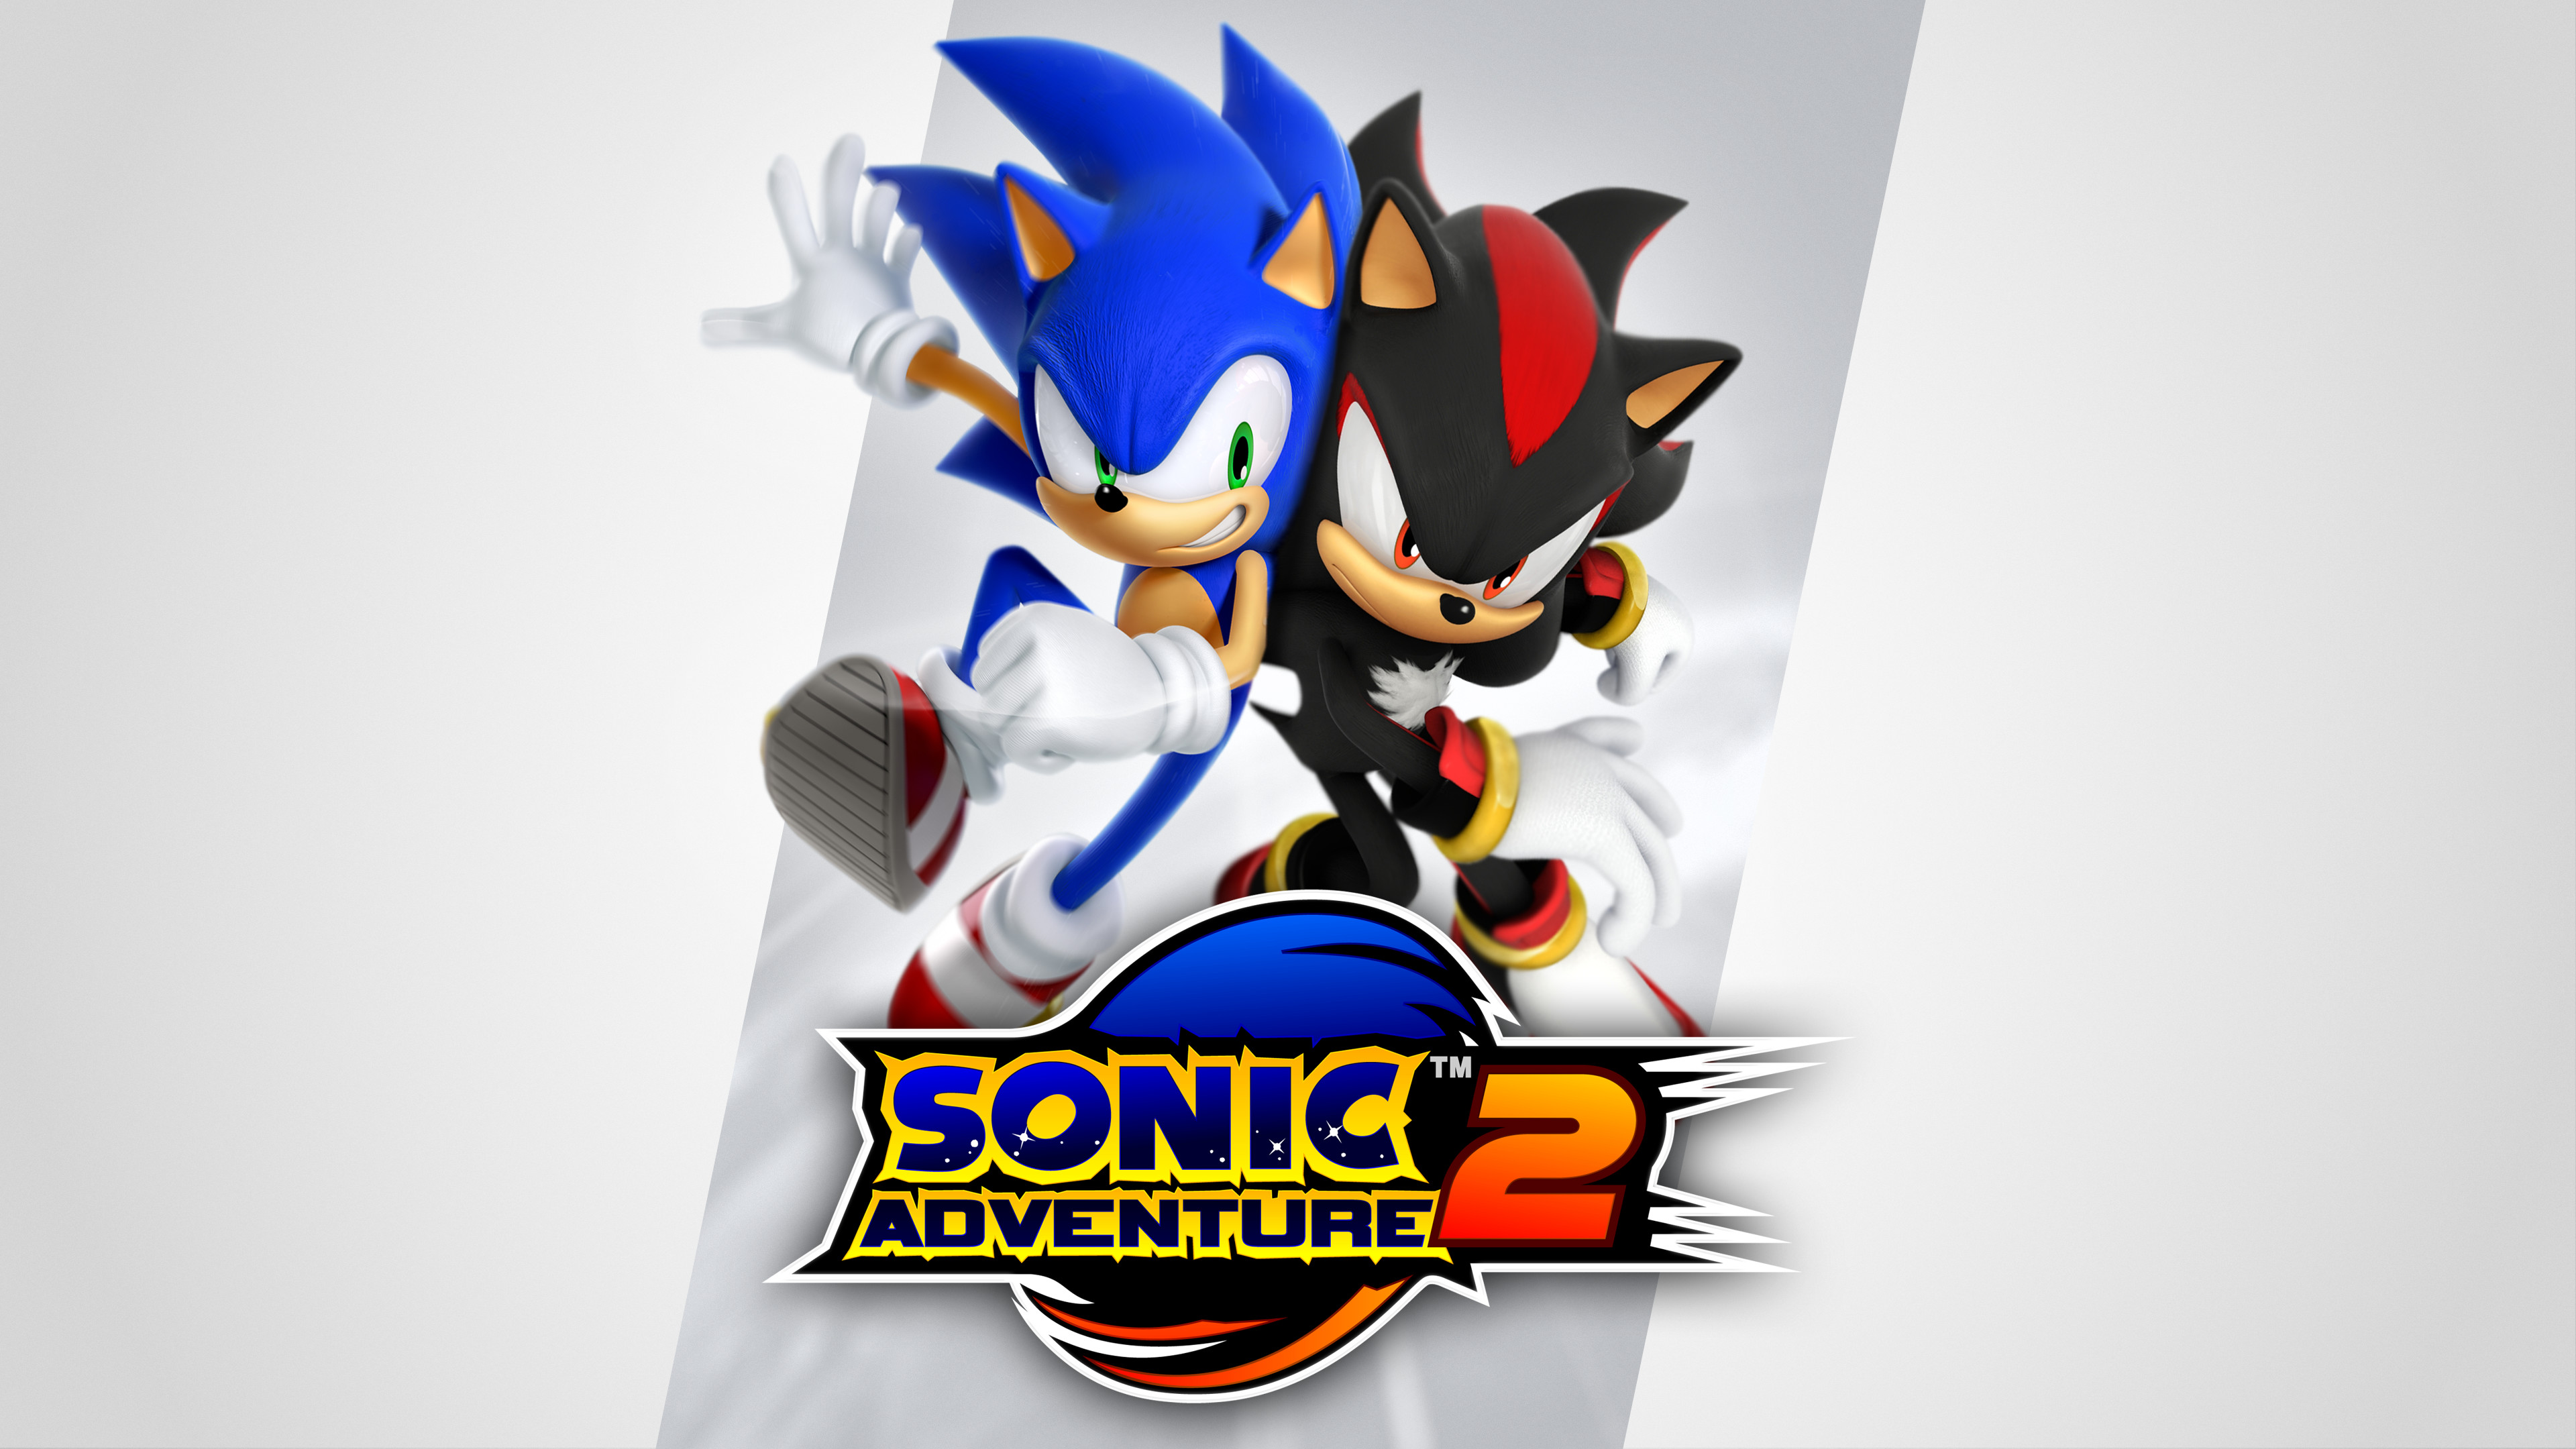 3840x2160 ... Sonic Adventure 2 Remastered Wallpaper 4K by gameplayuk